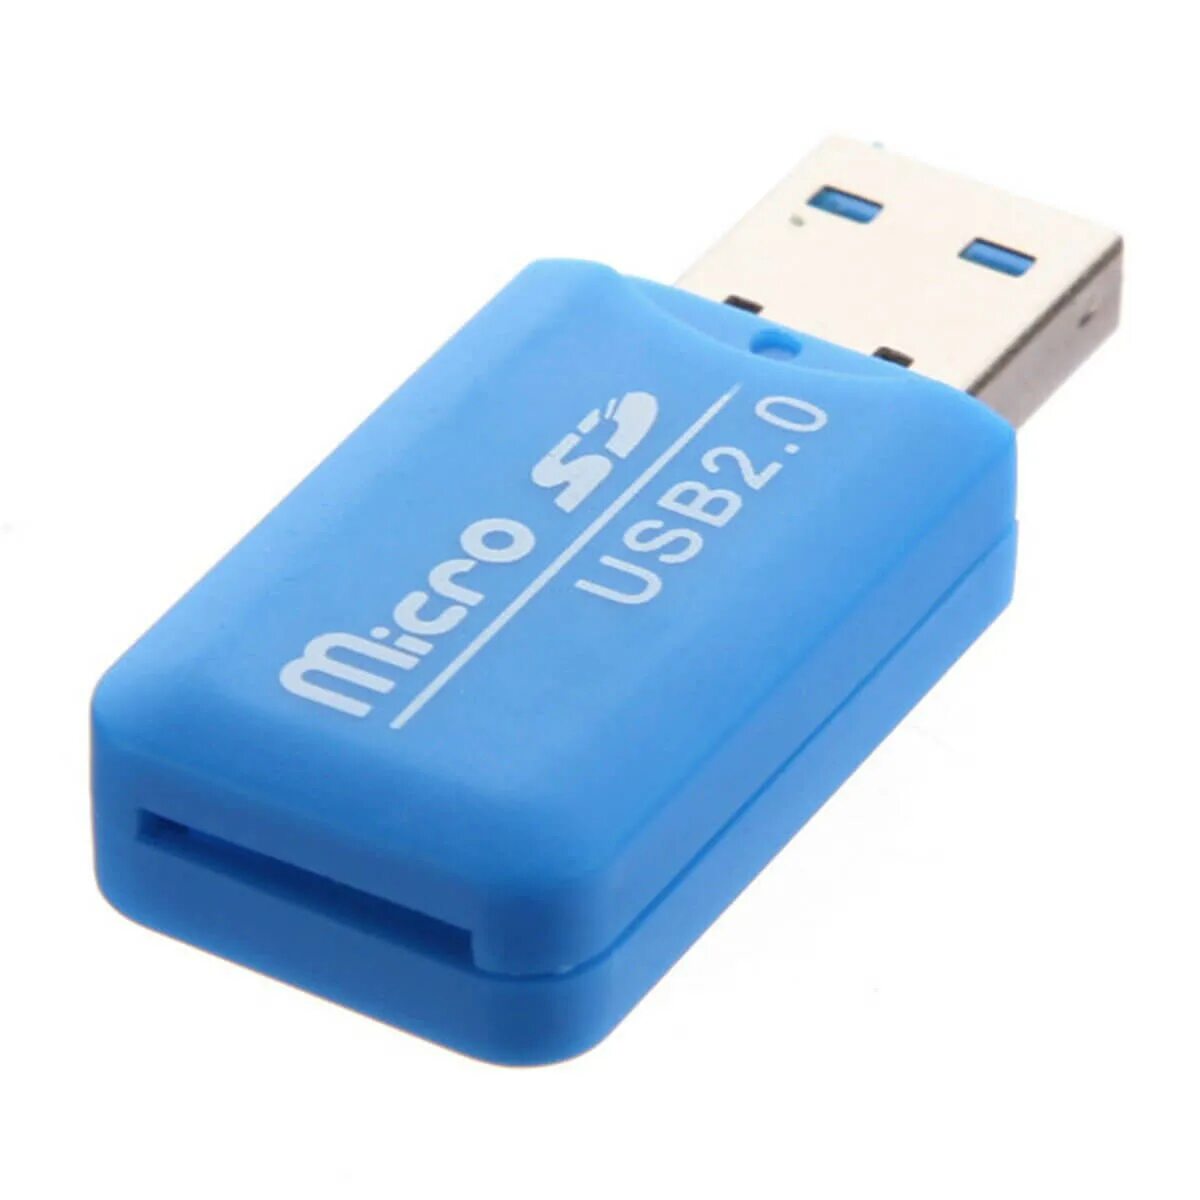 Адаптер USB 3.0 микро SD. Card Reader 2 SD 2 MICROSD. Адаптер микро SD карта TF кард-ридер USB. Картридер для микро SD USB 2.0. Usb привод купить